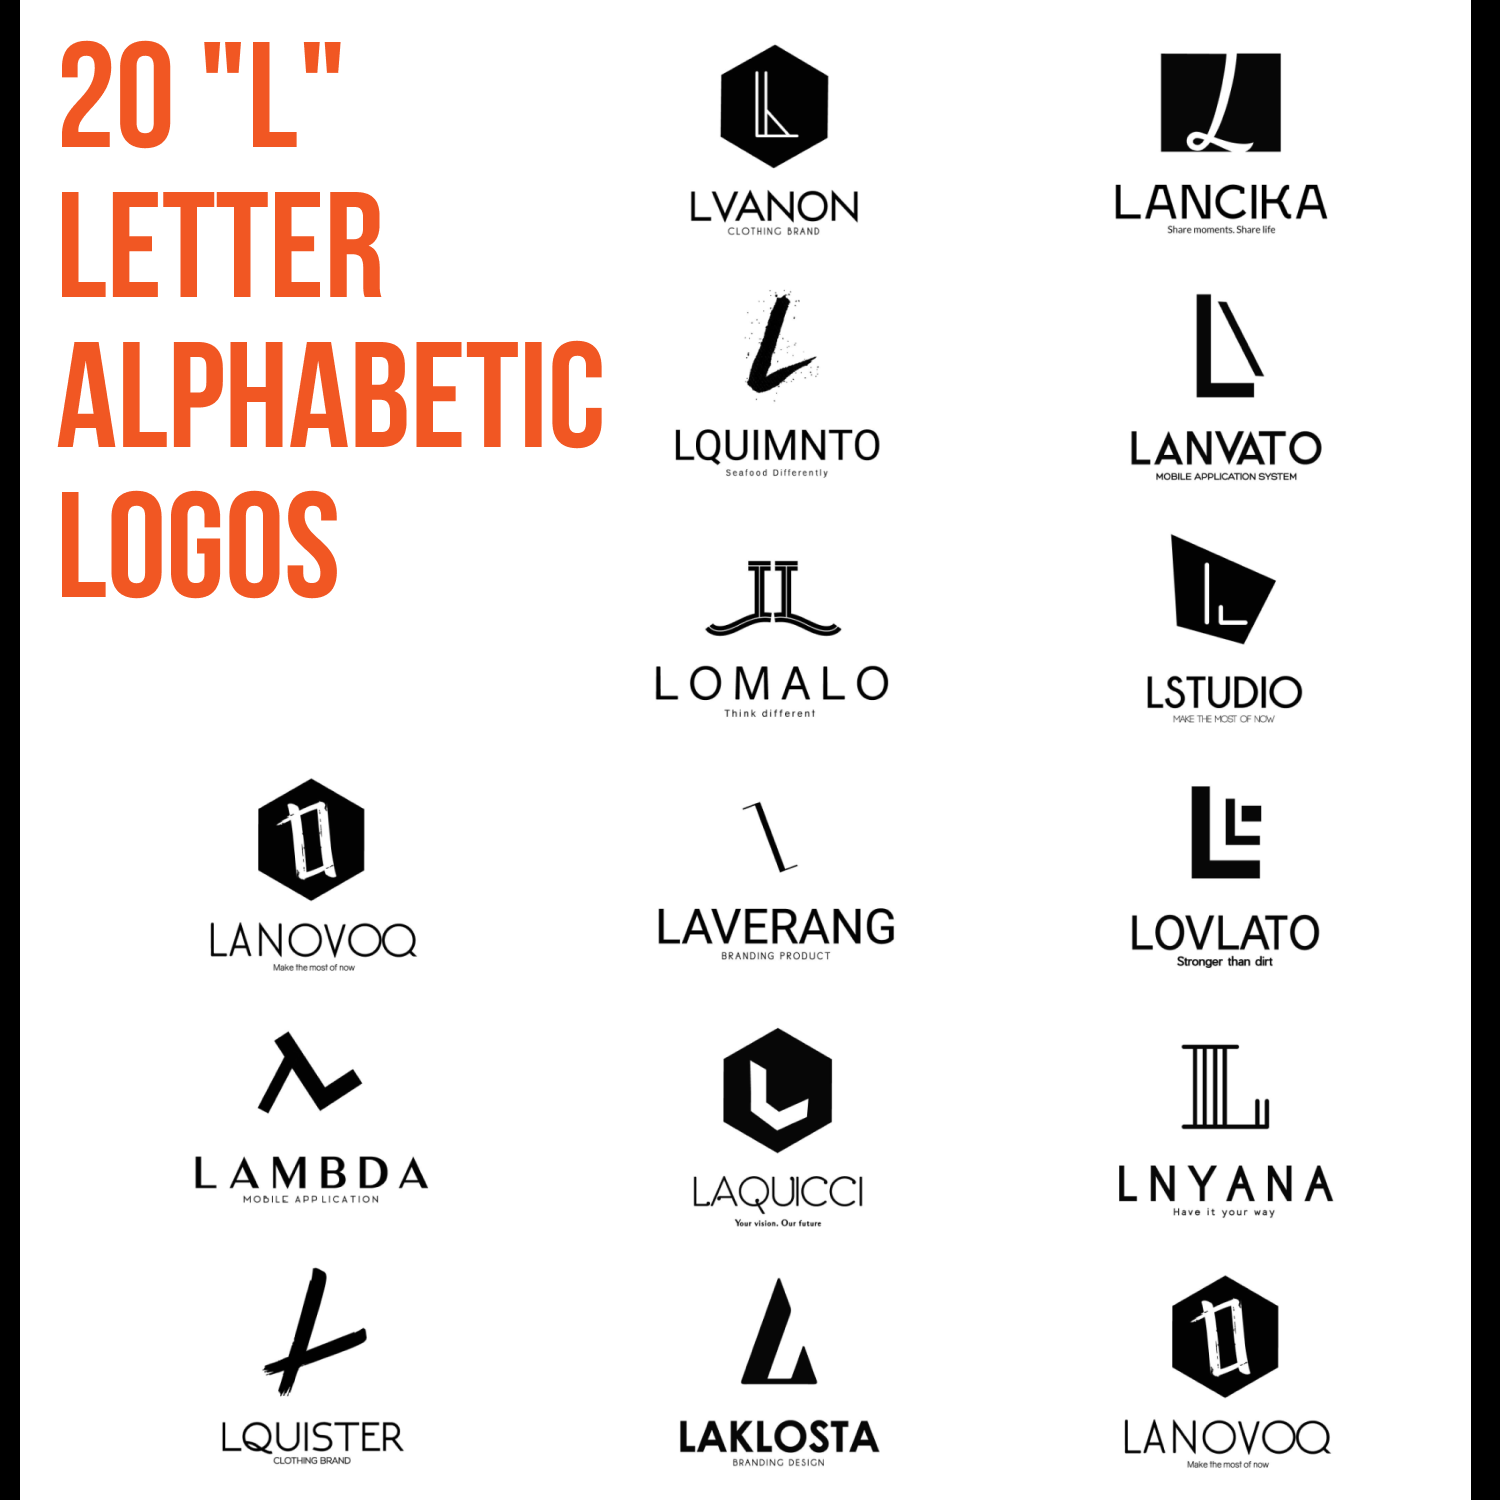 20 "L" Letter Alphabetic Logos cover.